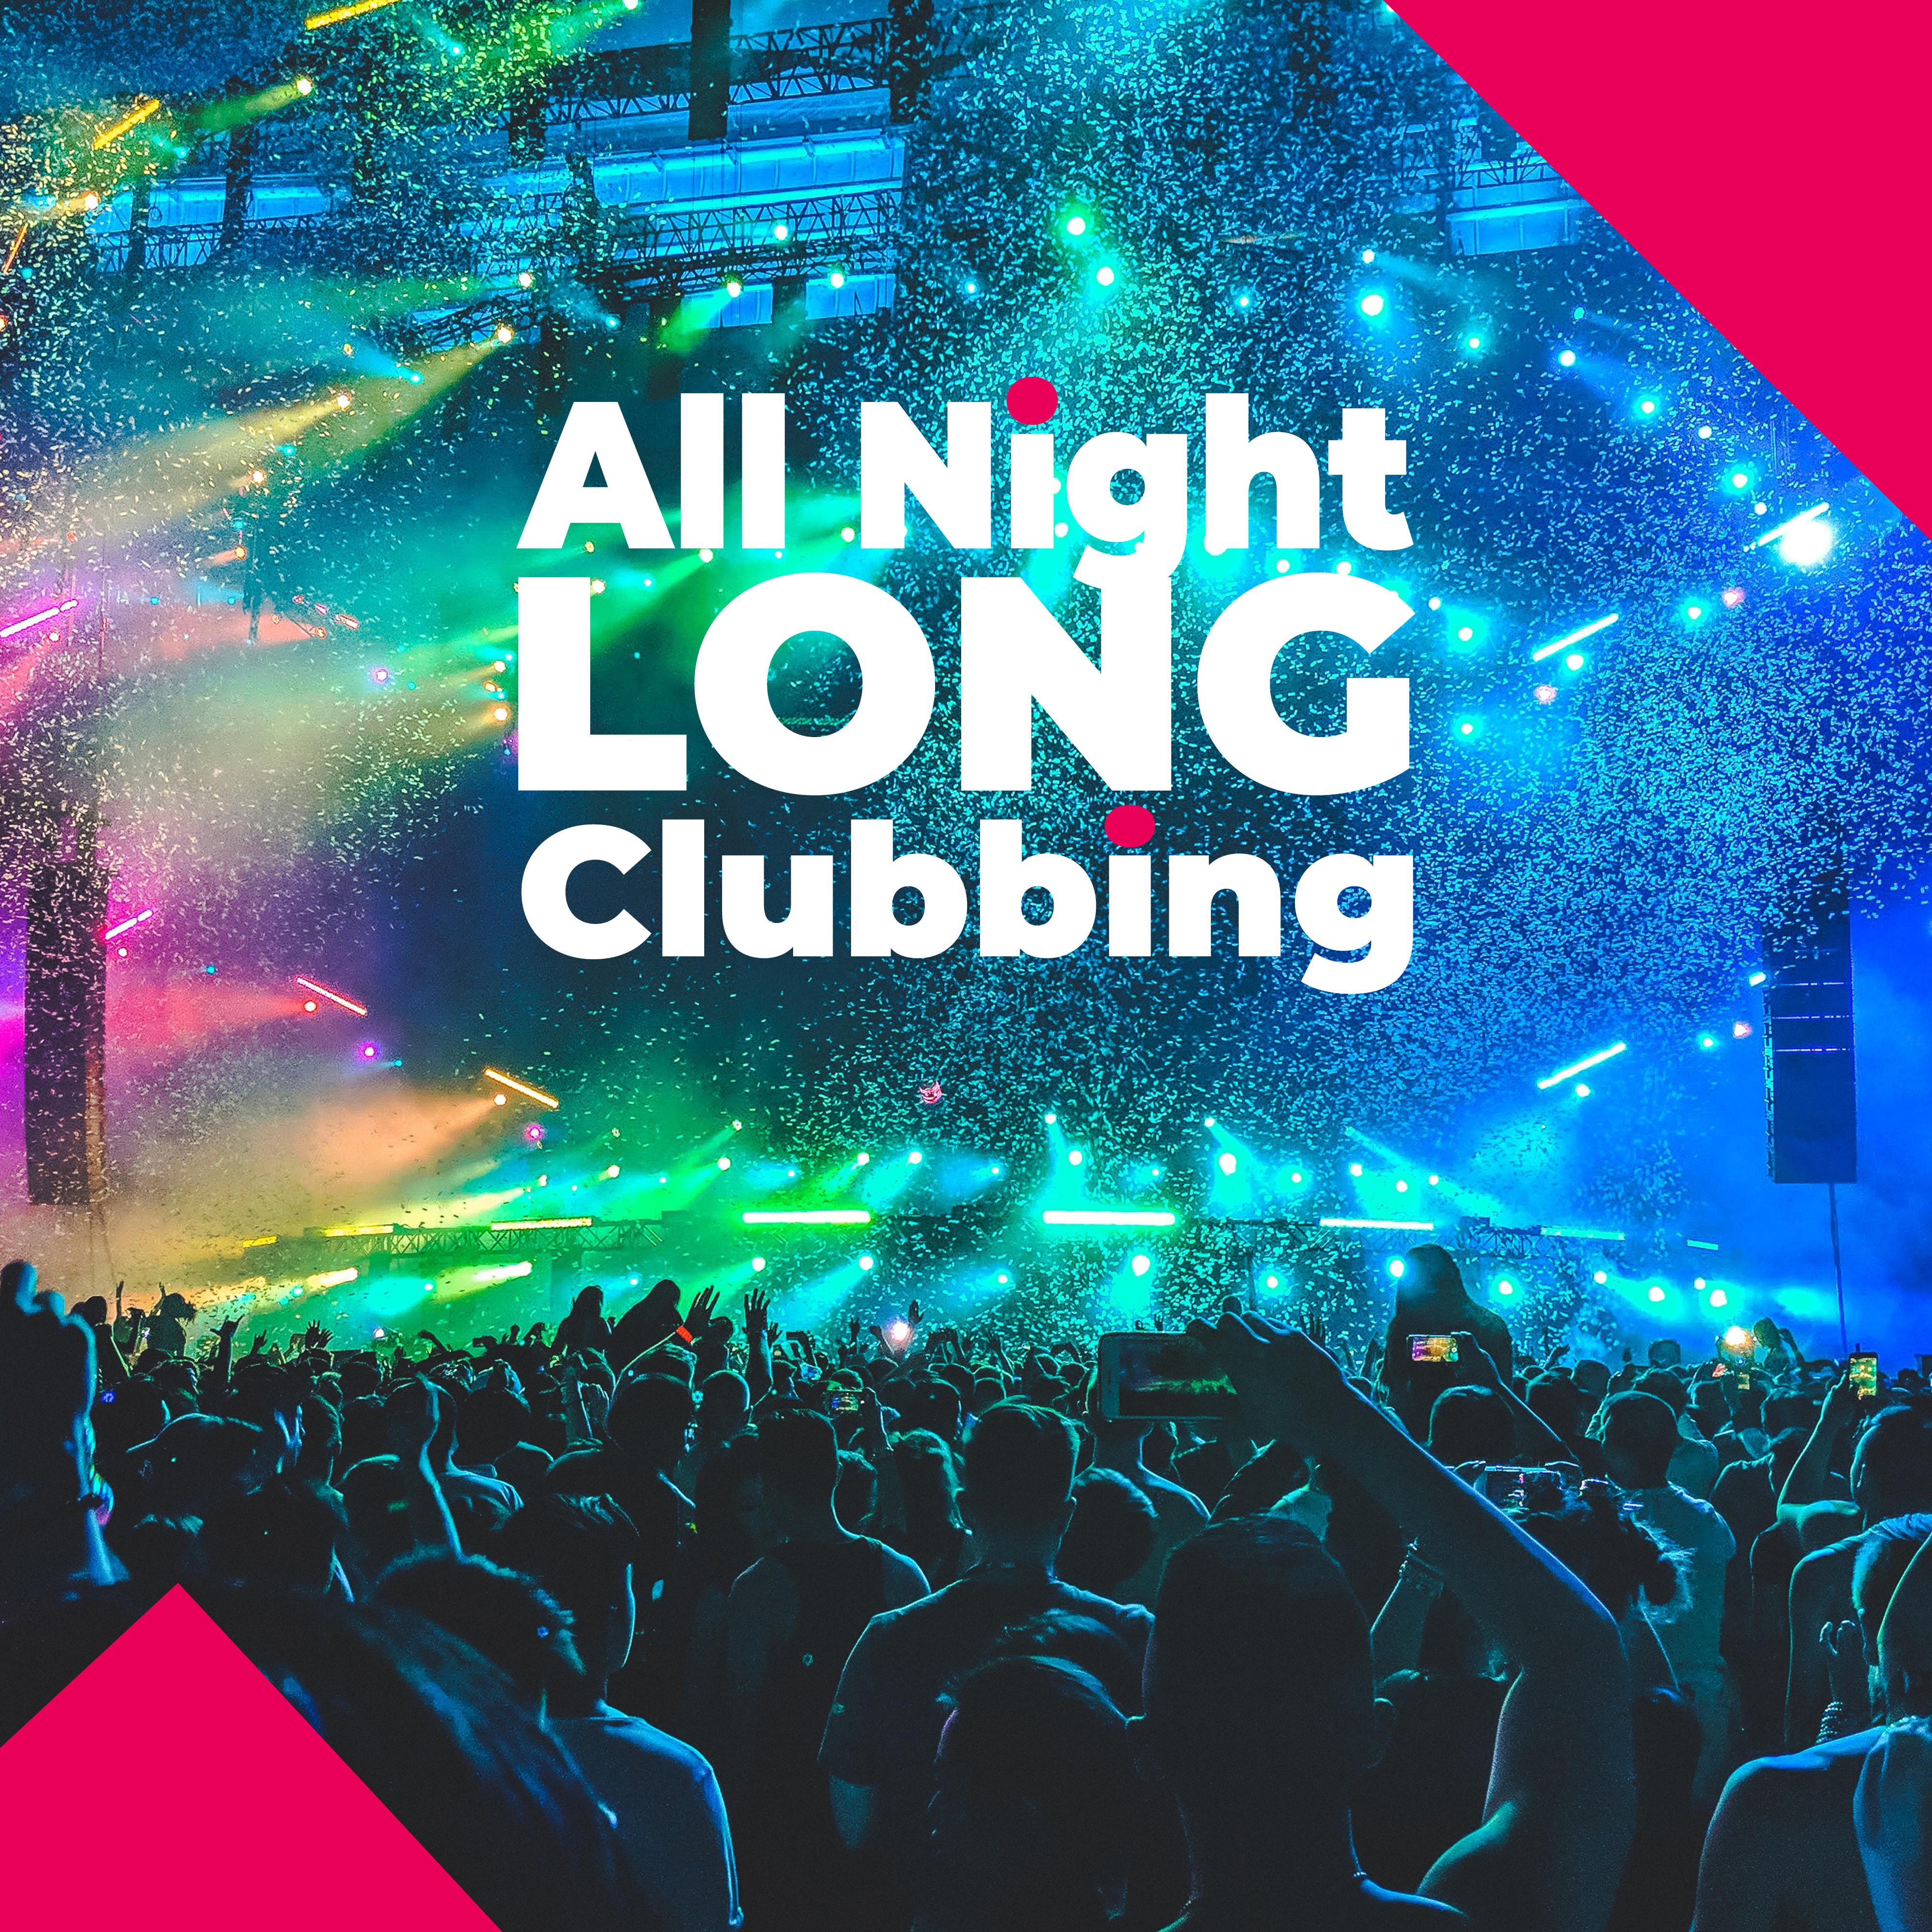 All Night Long Clubbing